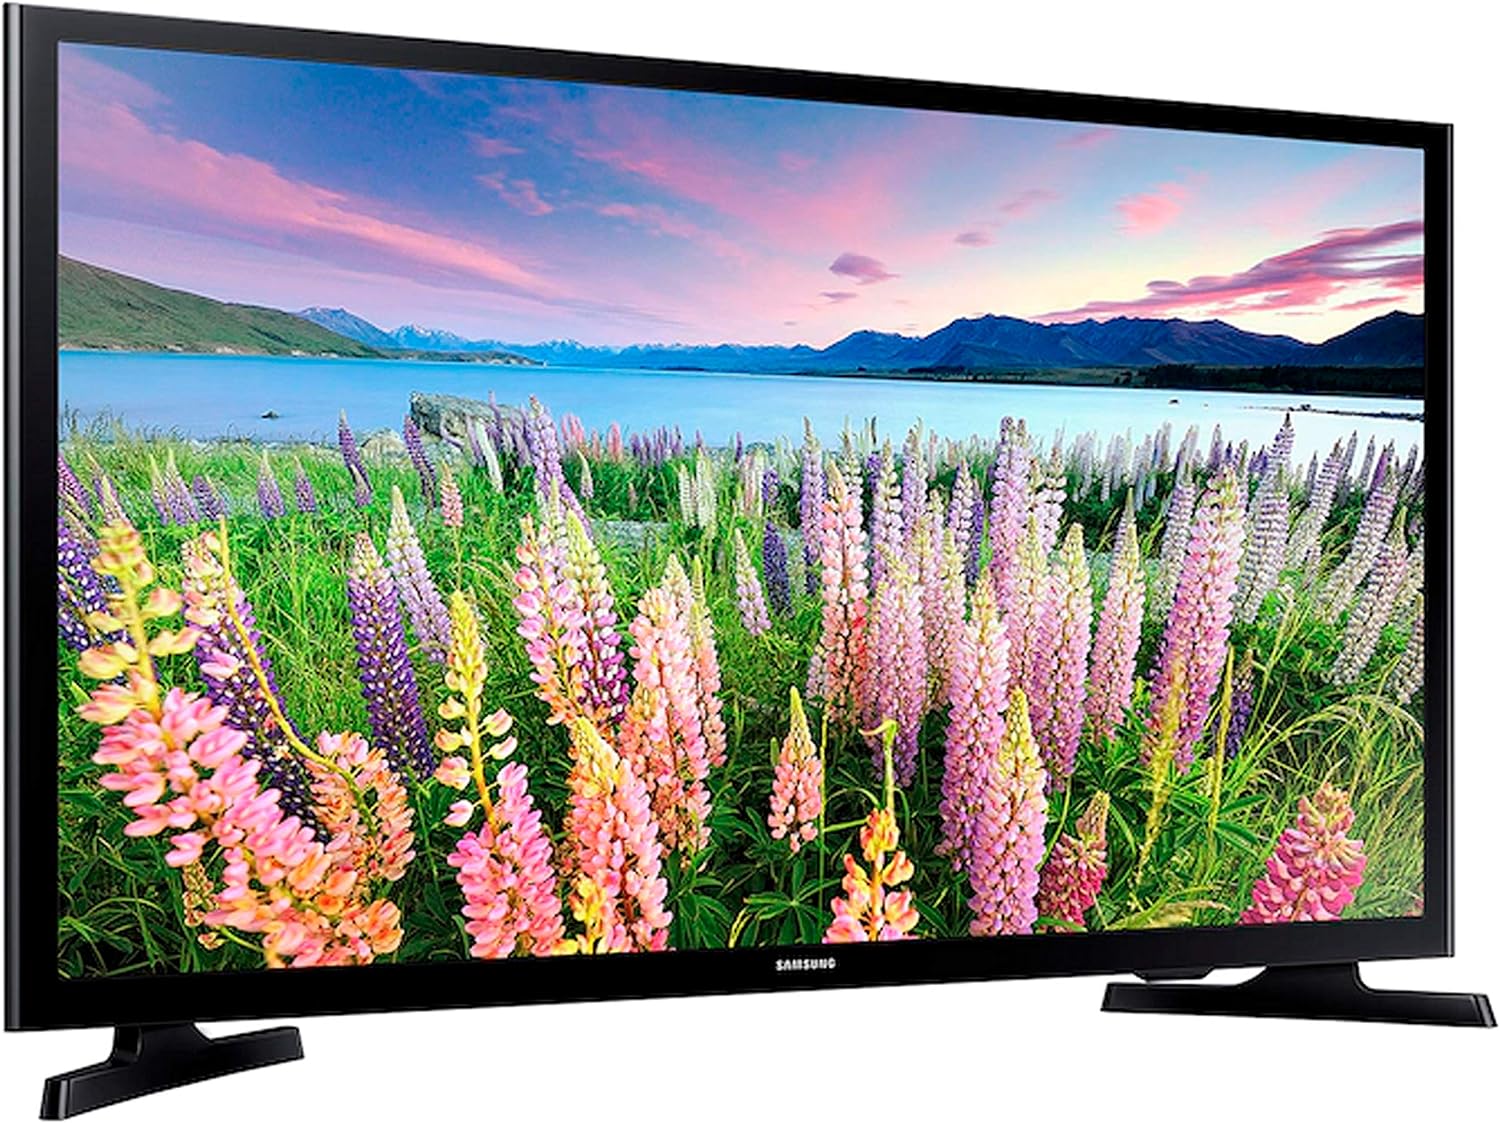 SAMSUNG 40-inch Class LED Smart FHD TV 1080P (UN40N5200AFXZA, 2019 Model), Black - $190